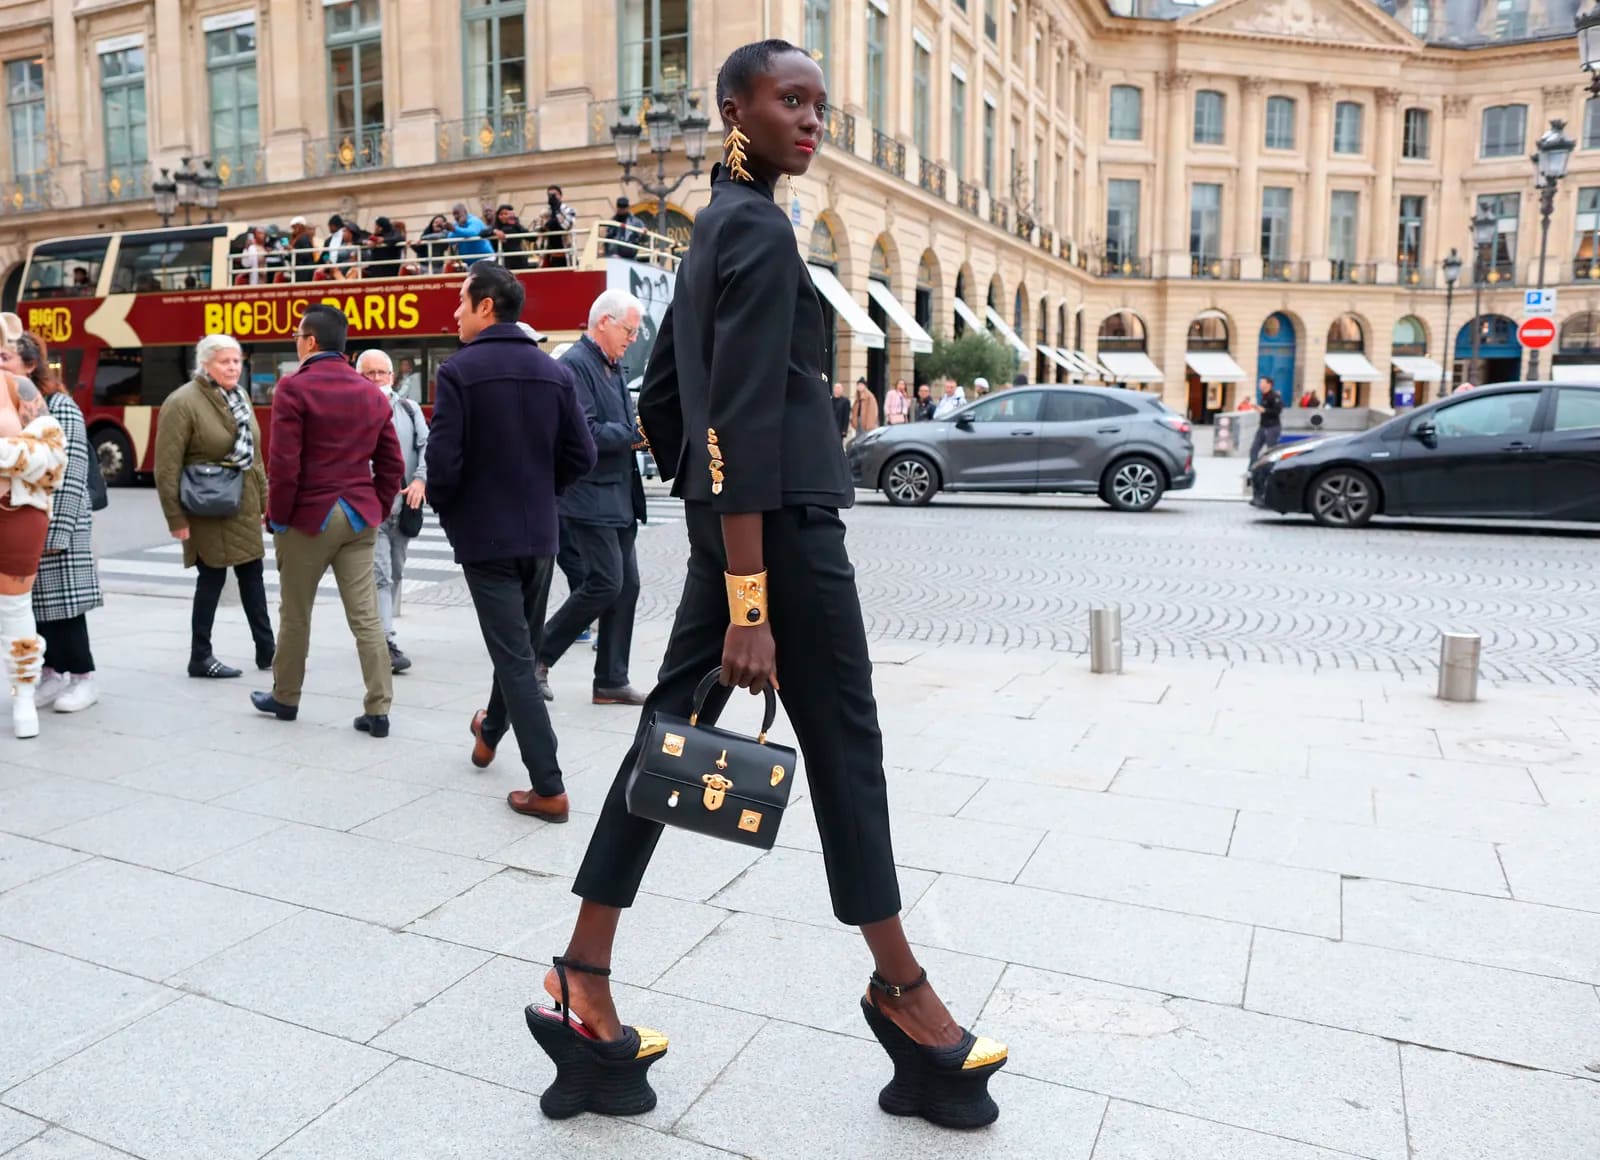 16 ideias de Sapatilhas Louis Vuitton  louis vuitton, sapatos, sapatos  fashion